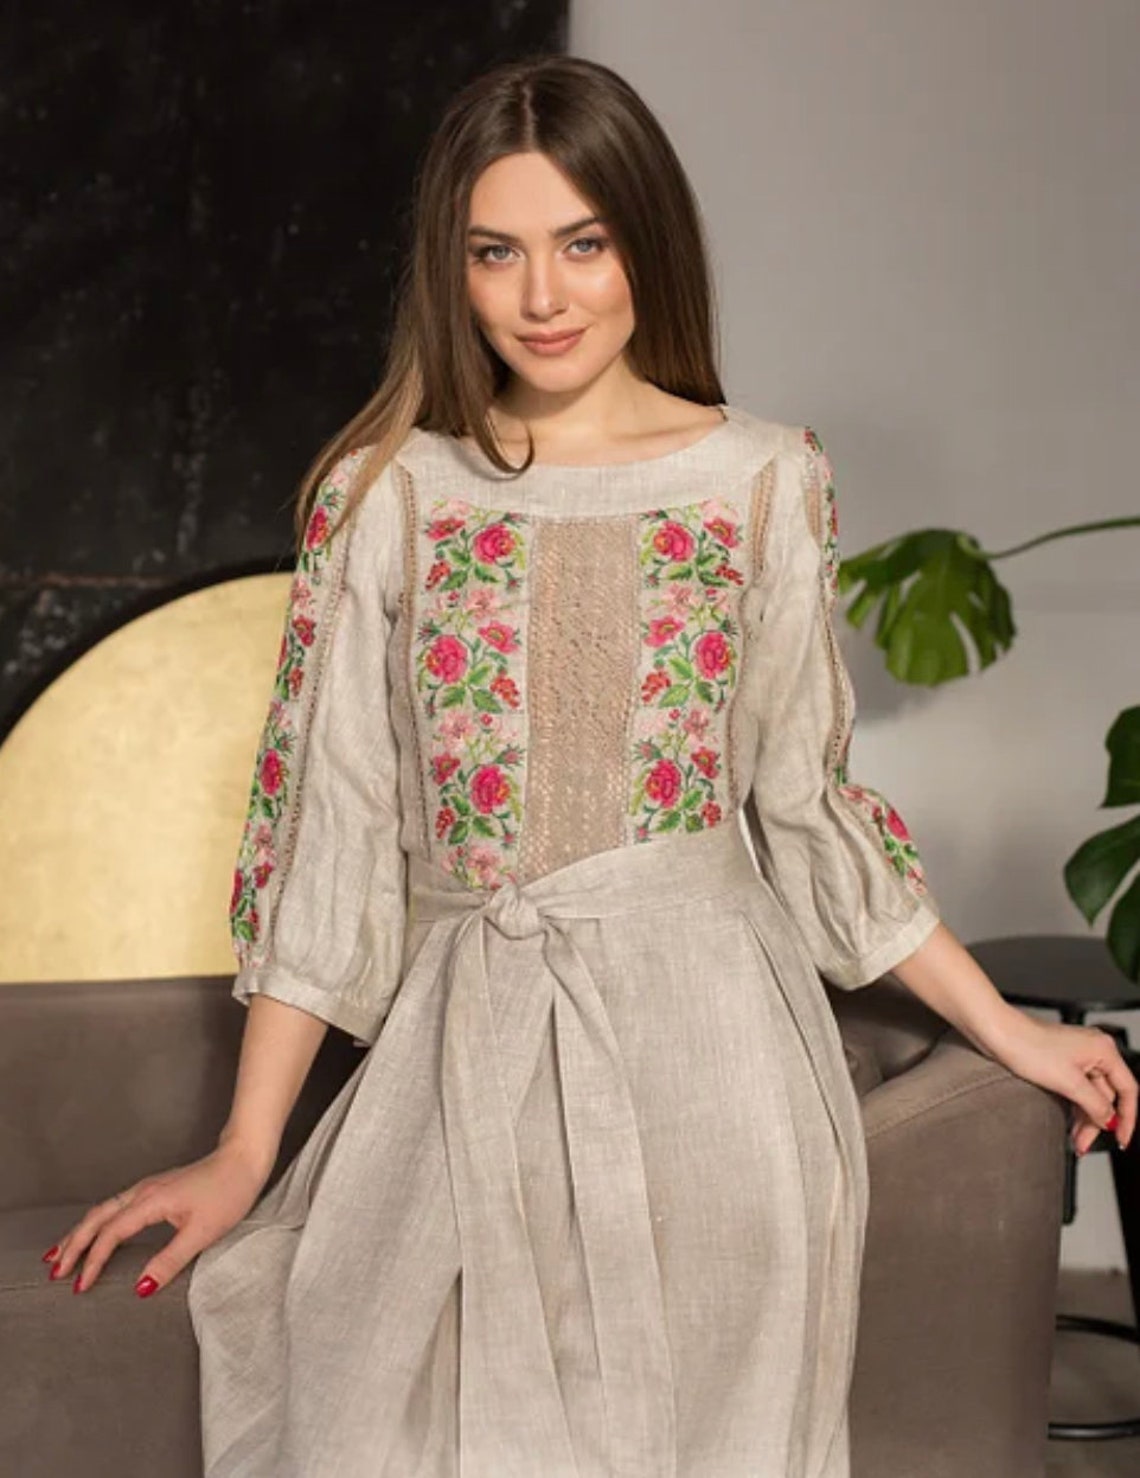 100% linen Embroidered dress Ukrainian embroidered dress | Etsy